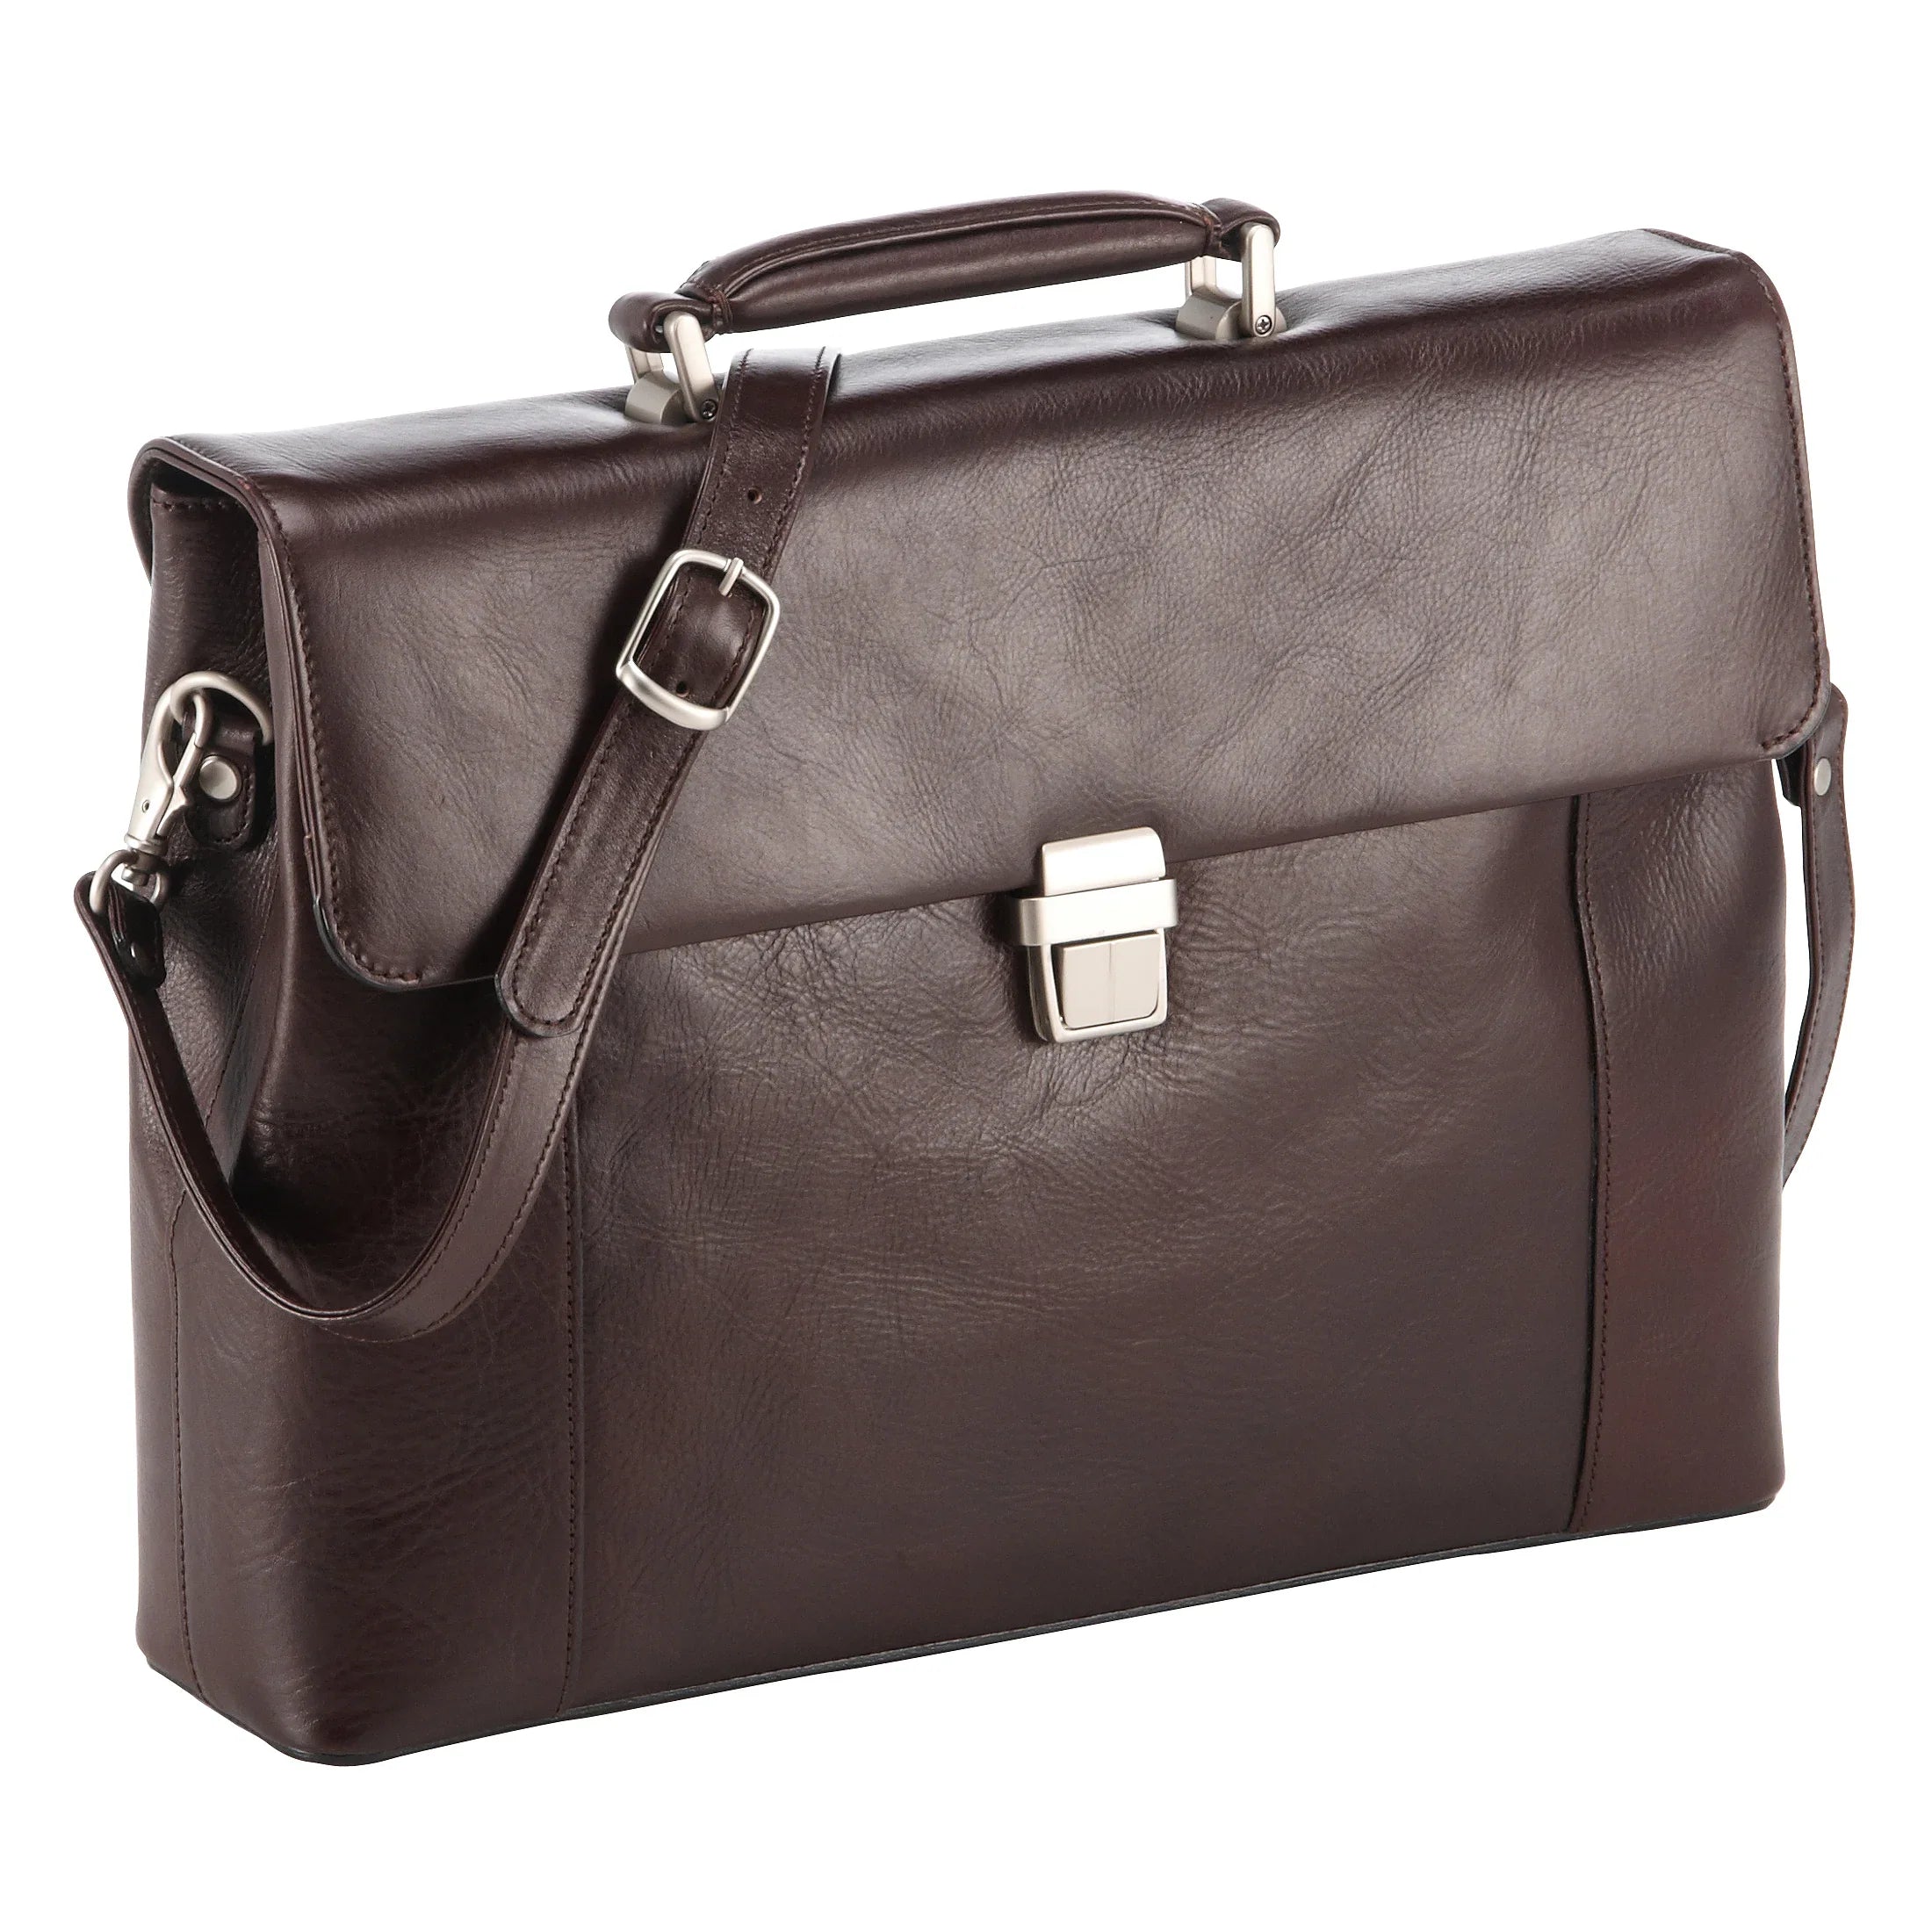 Dermata Business leather briefcase 2-compartments 40 cm - black